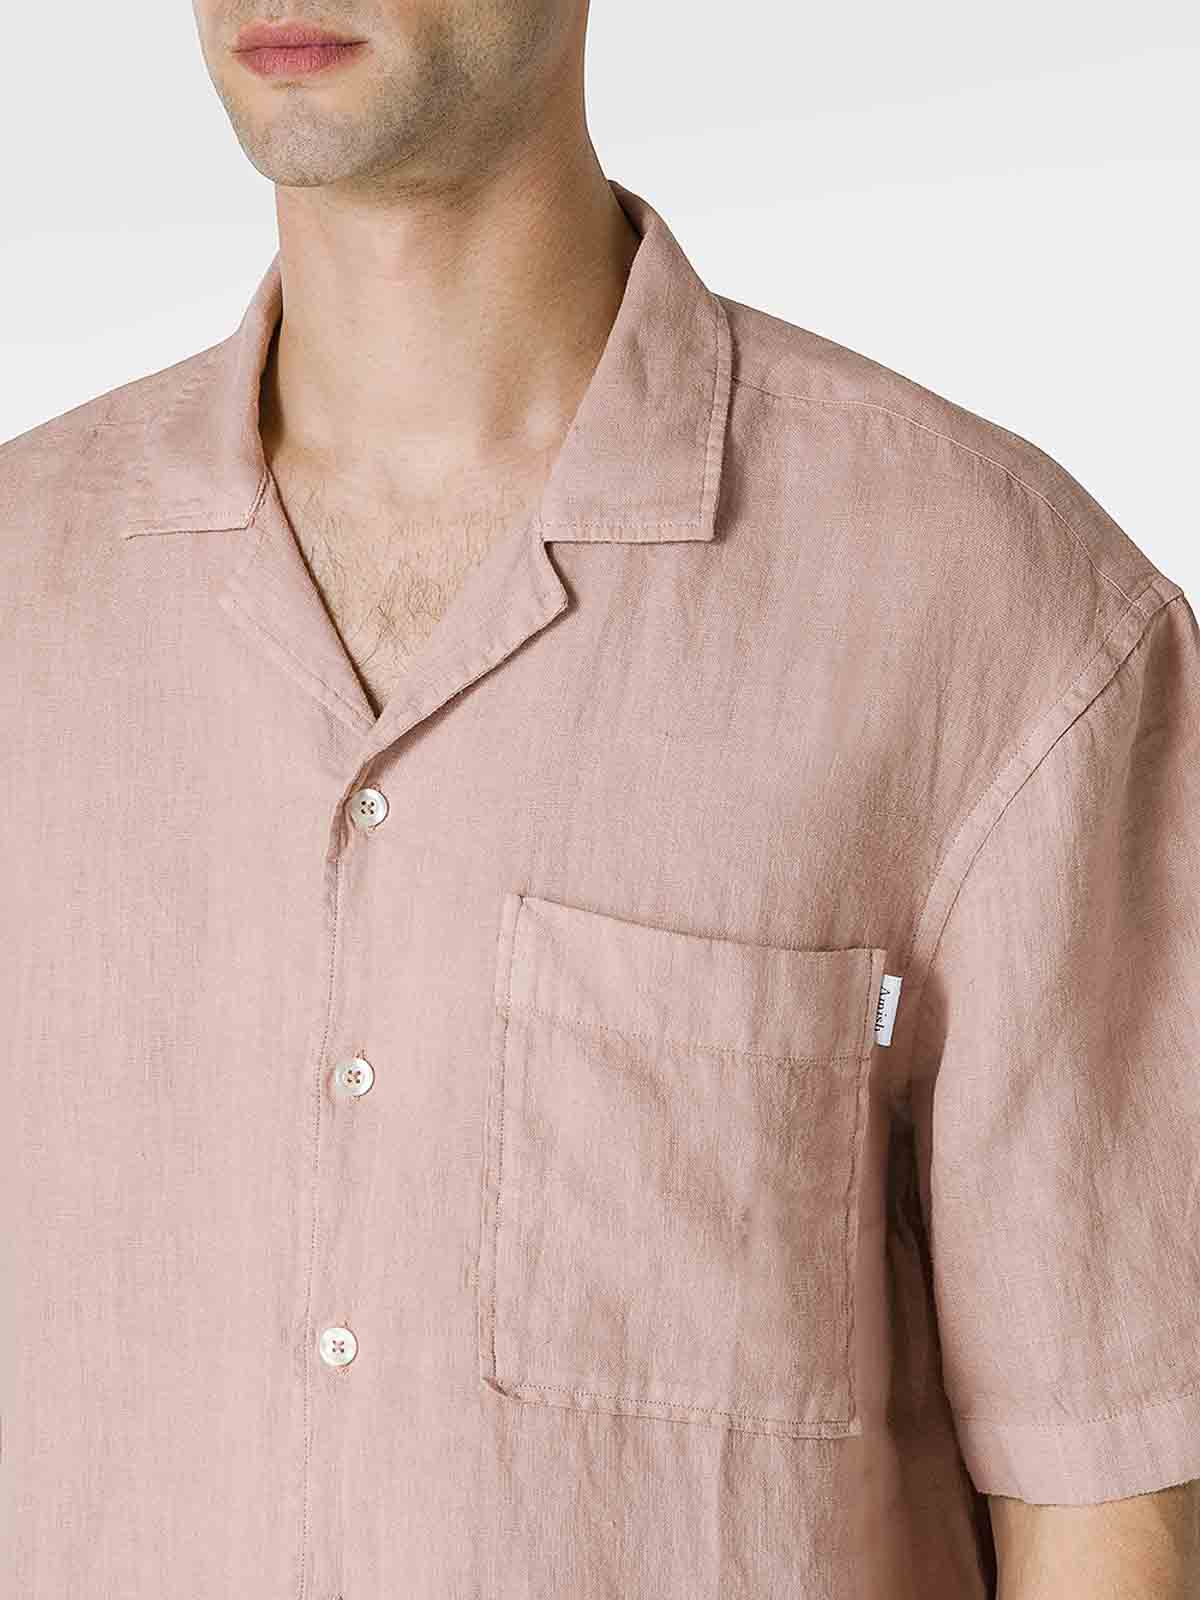 Shop Amish Highland Shirt In Color Carne Y Neutral